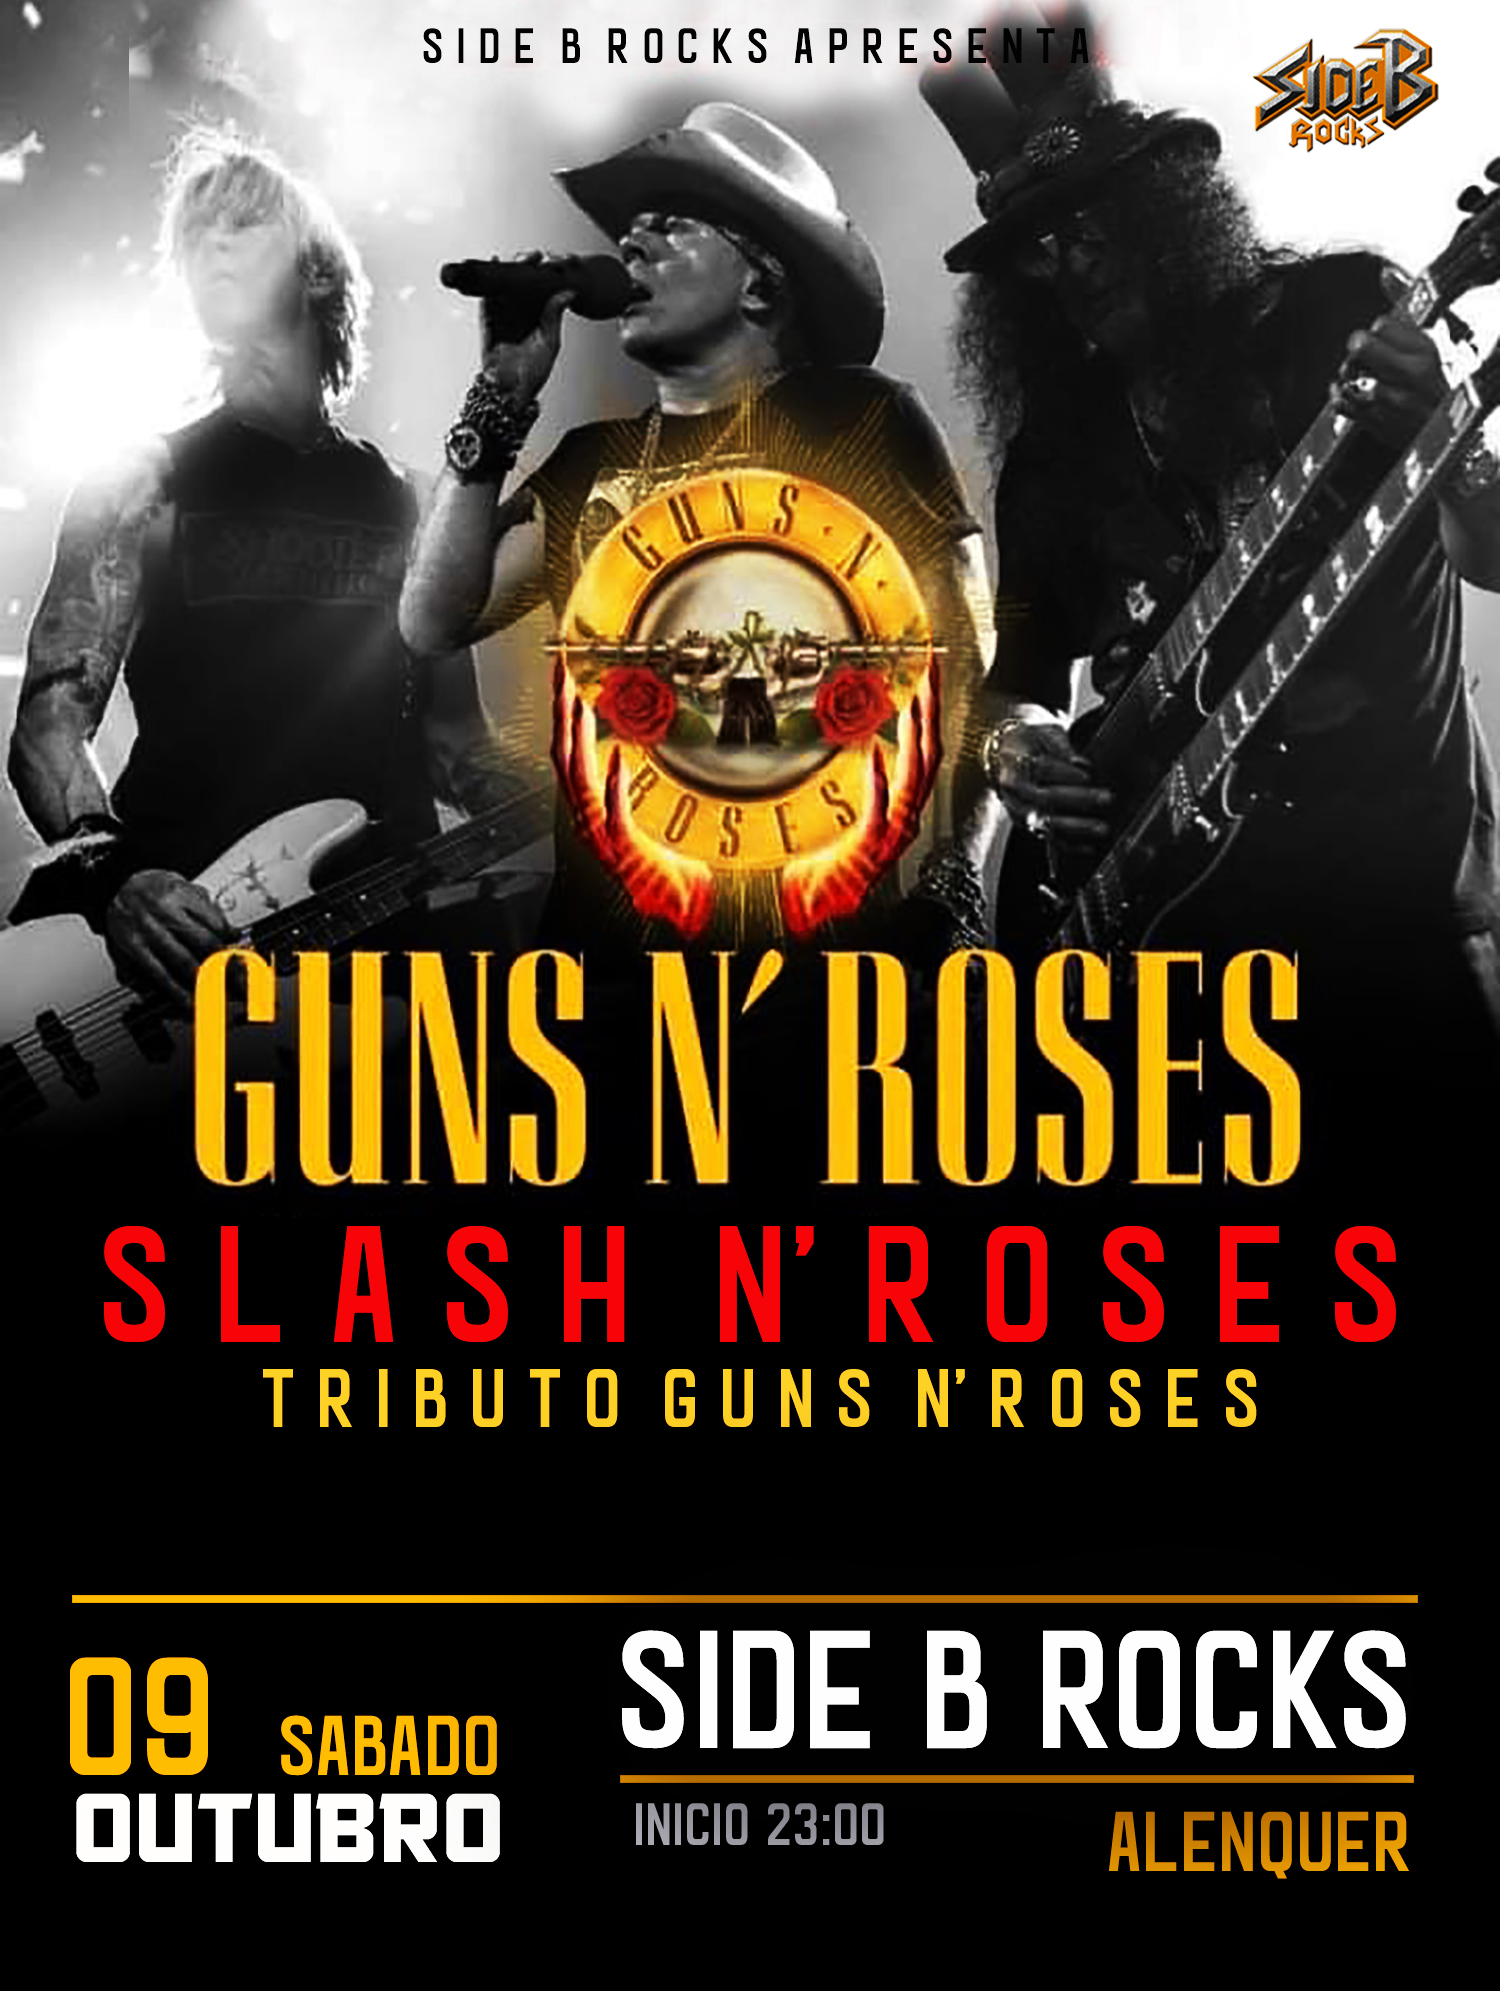 3º Aniversário Side B Rocks - SLASH N'ROSES / Tributo GUNS N'ROSES